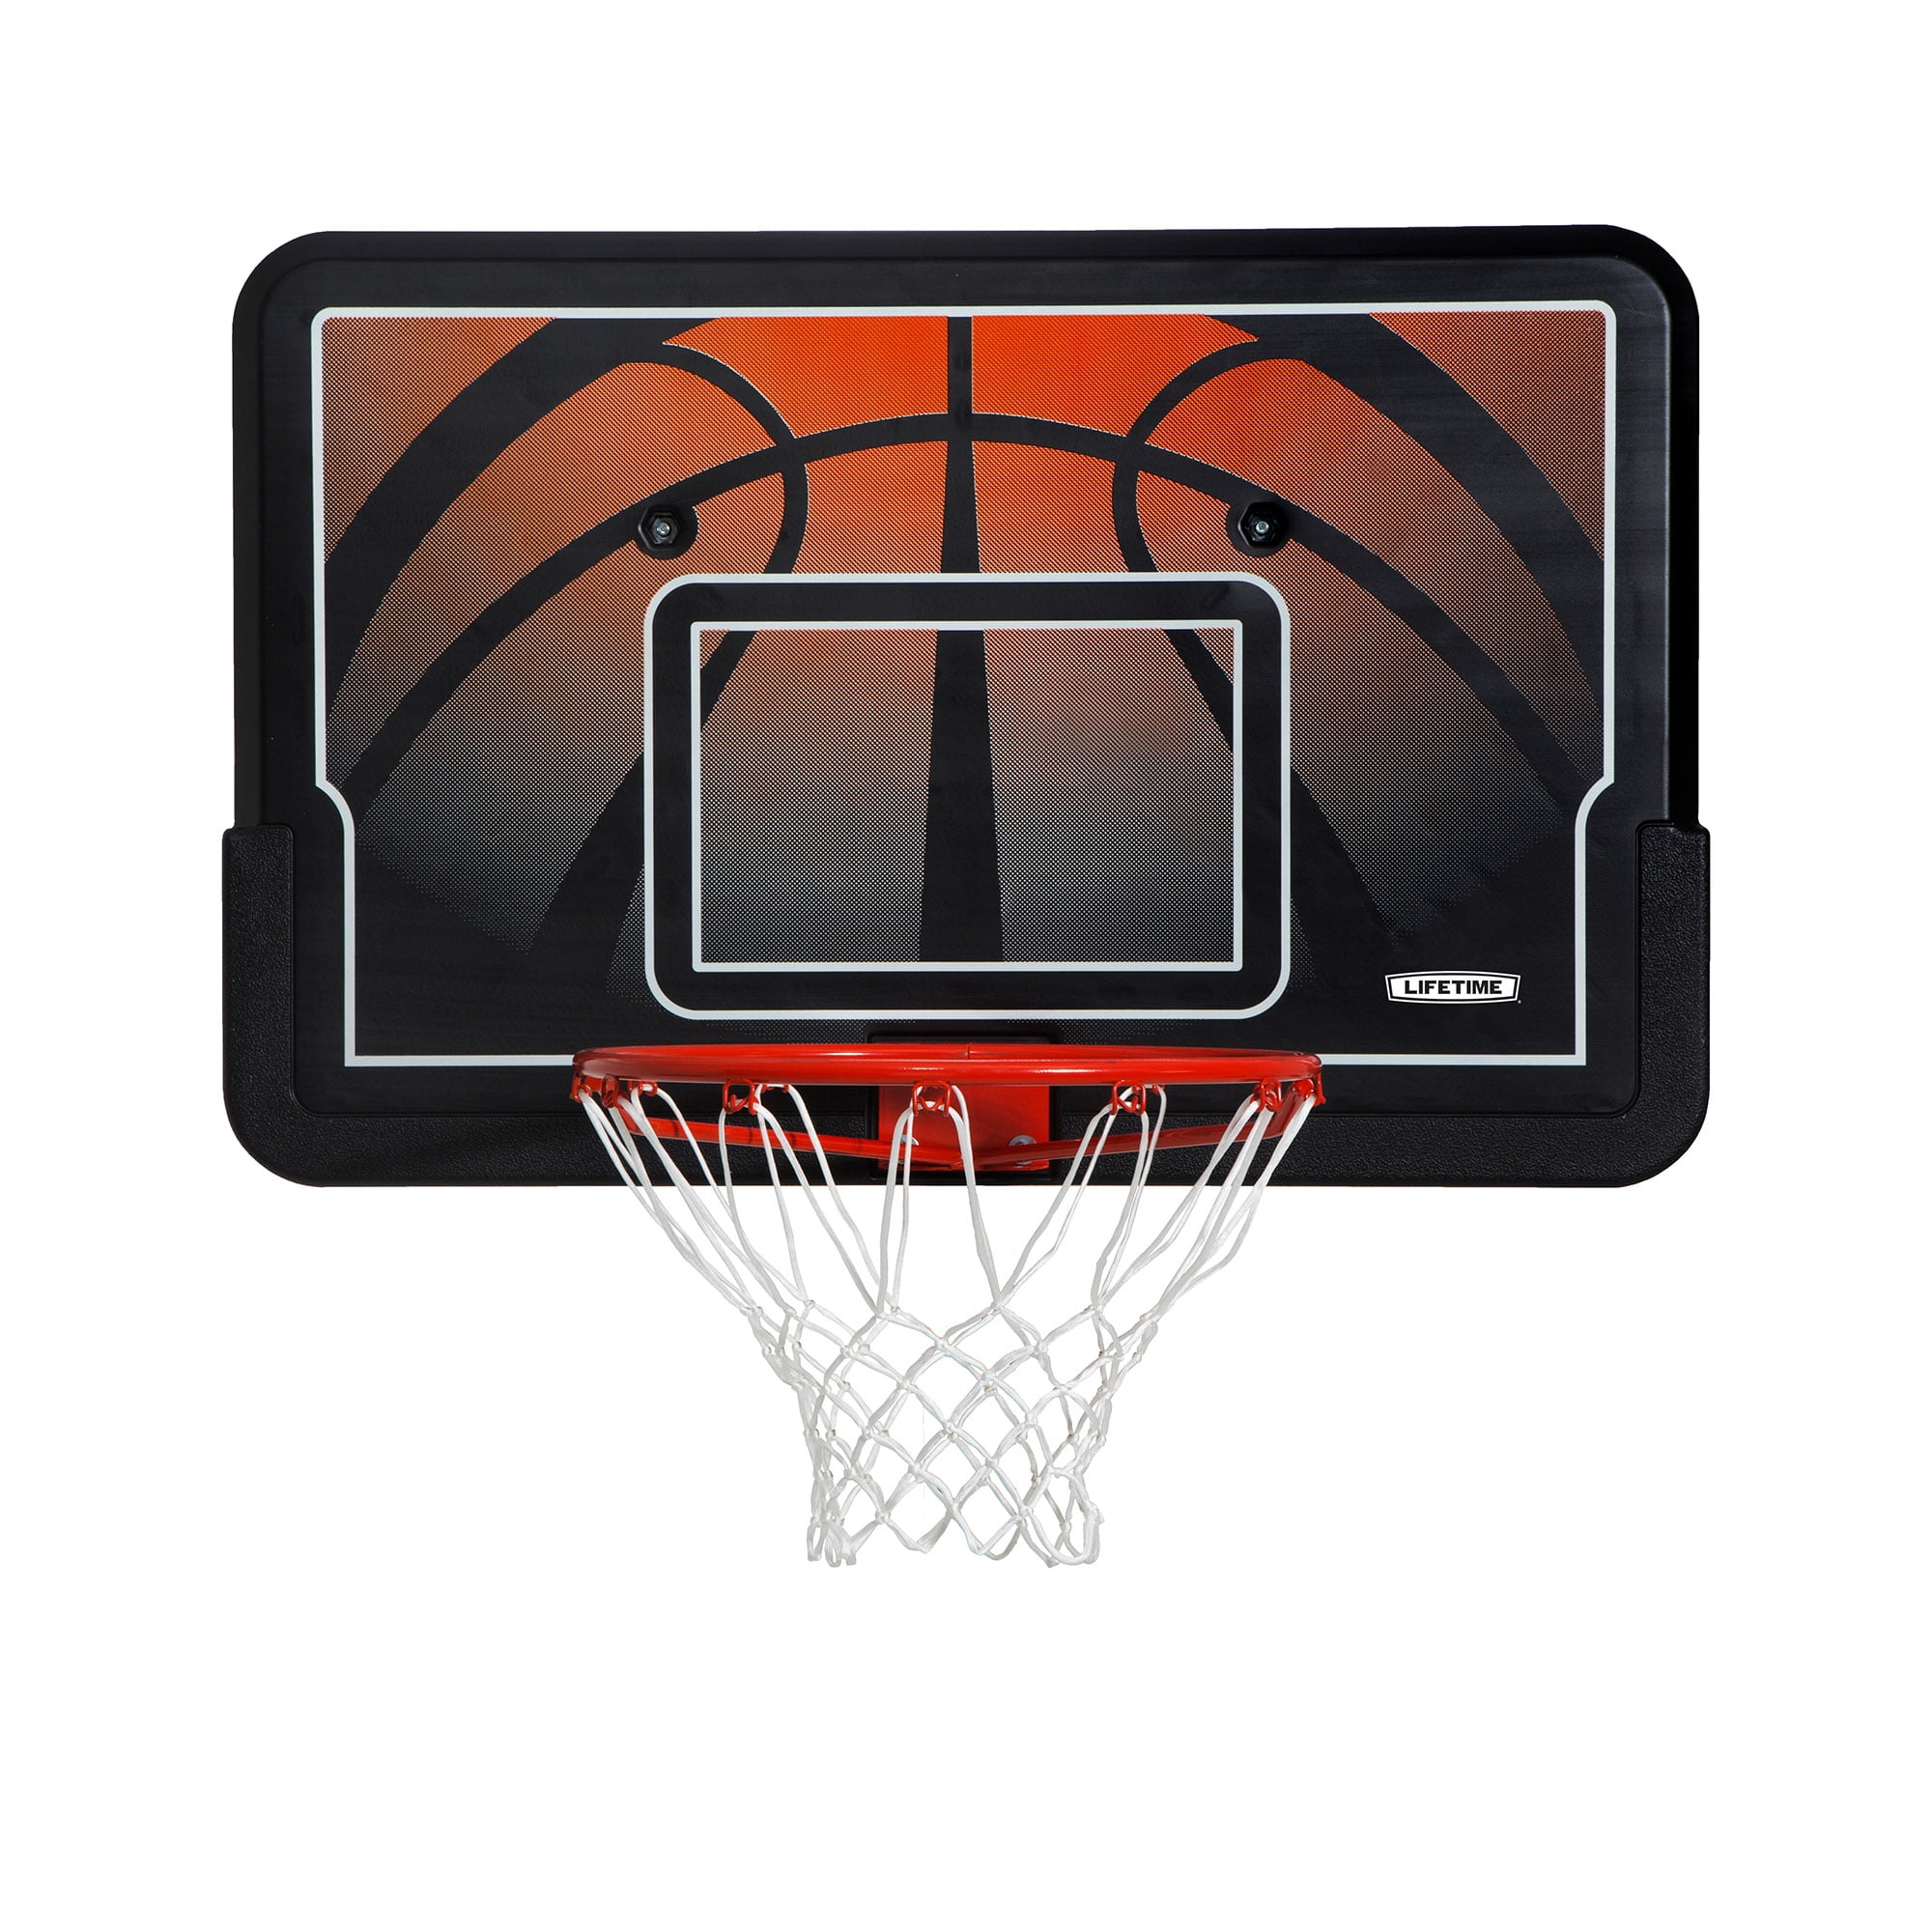 44" Basketball Impact Backboard Combo System Outdoor Wall Mount Hoop Rim Sports